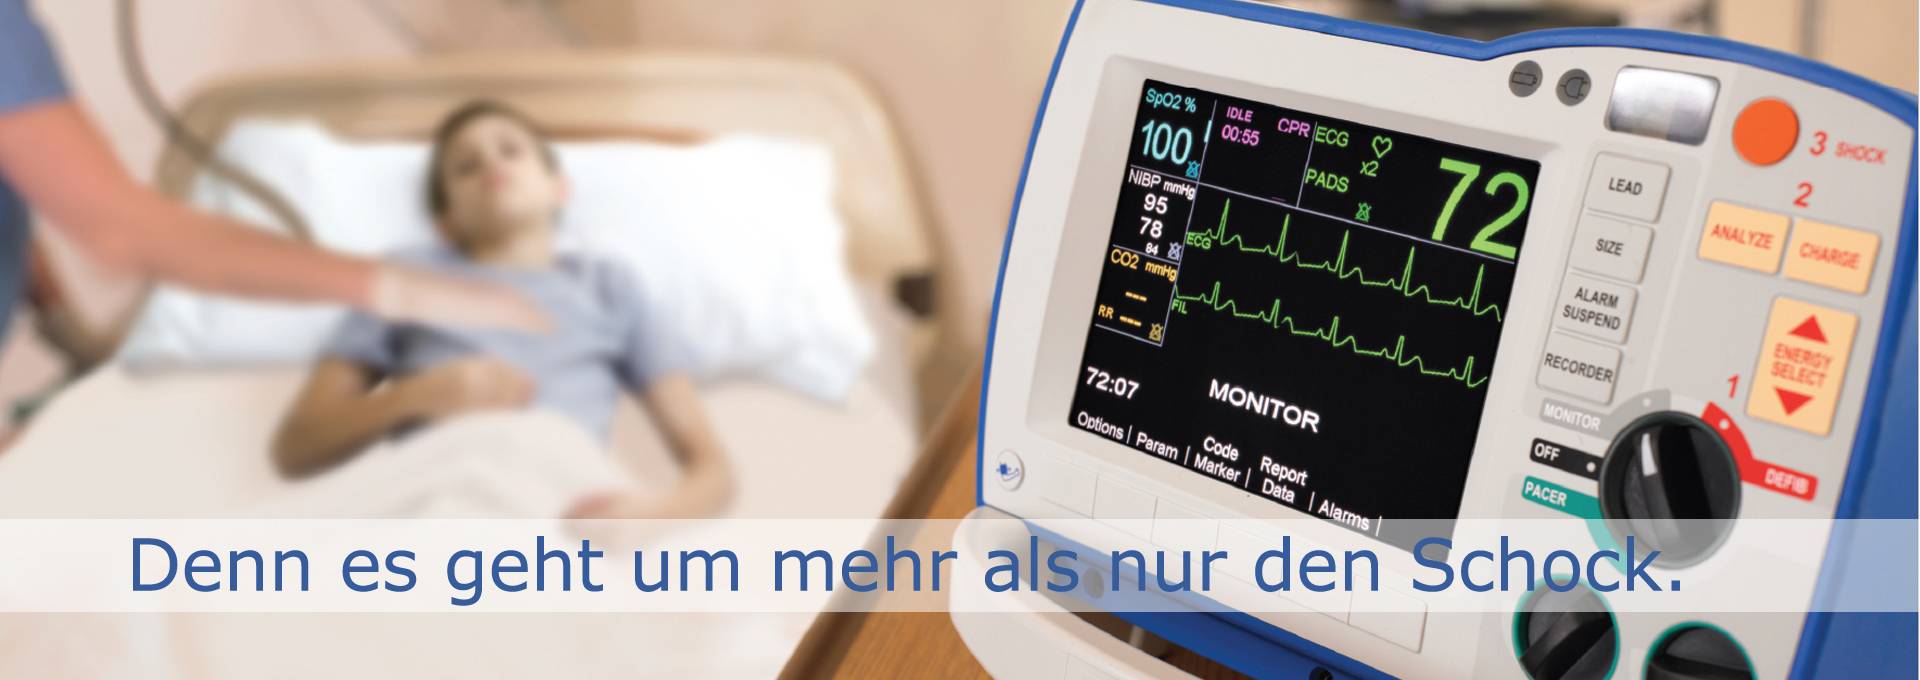 zoll r serie defibrillator ©Ulrike Kuttner